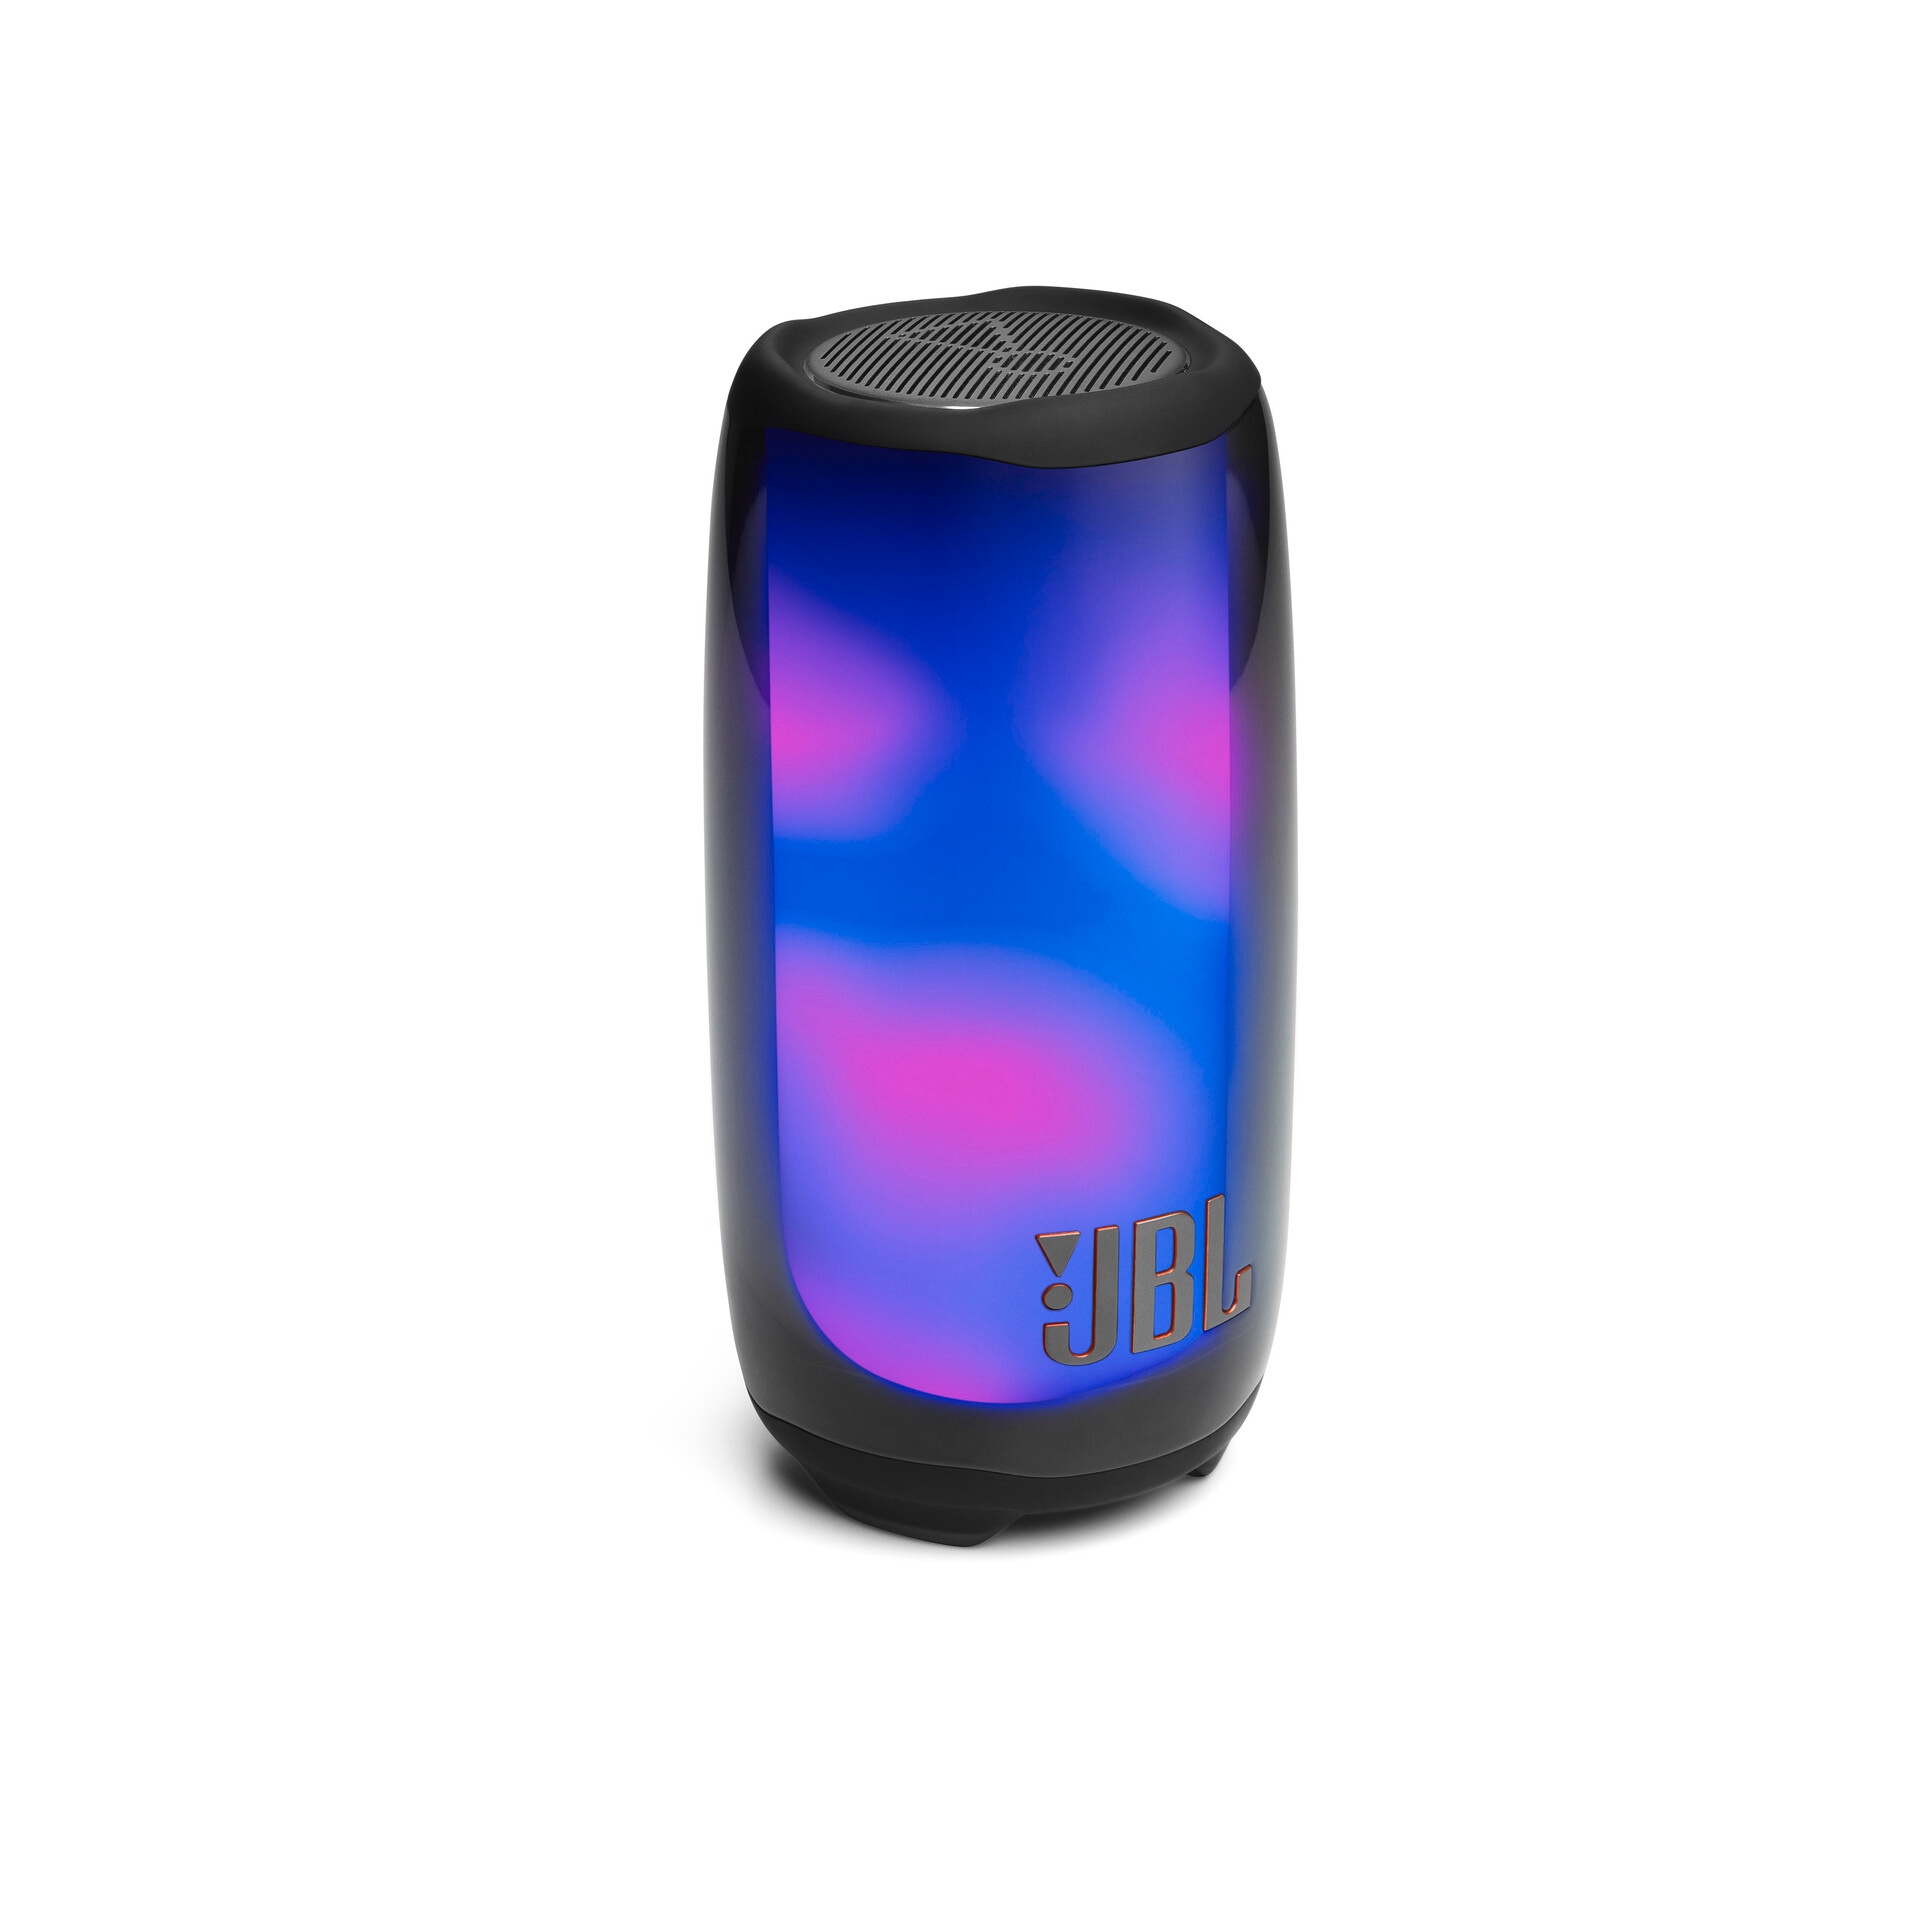 5«, St.) Bluetooth-Lautsprecher OTTO JBL bei (1 »Pulse kaufen